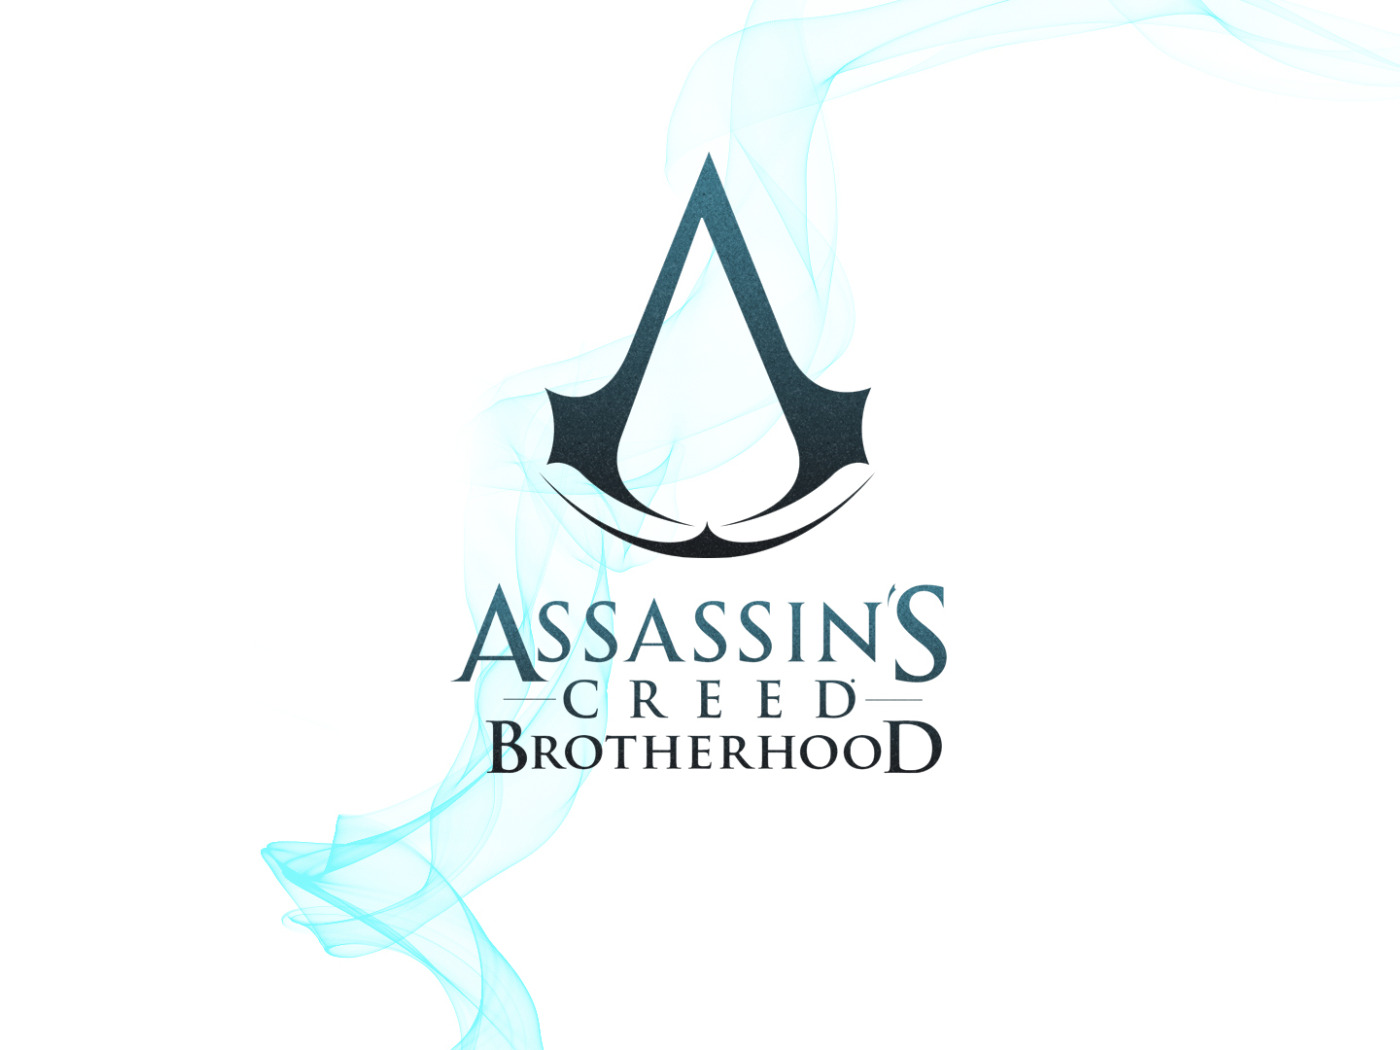 Assassins creed brotherhood на steam фото 88